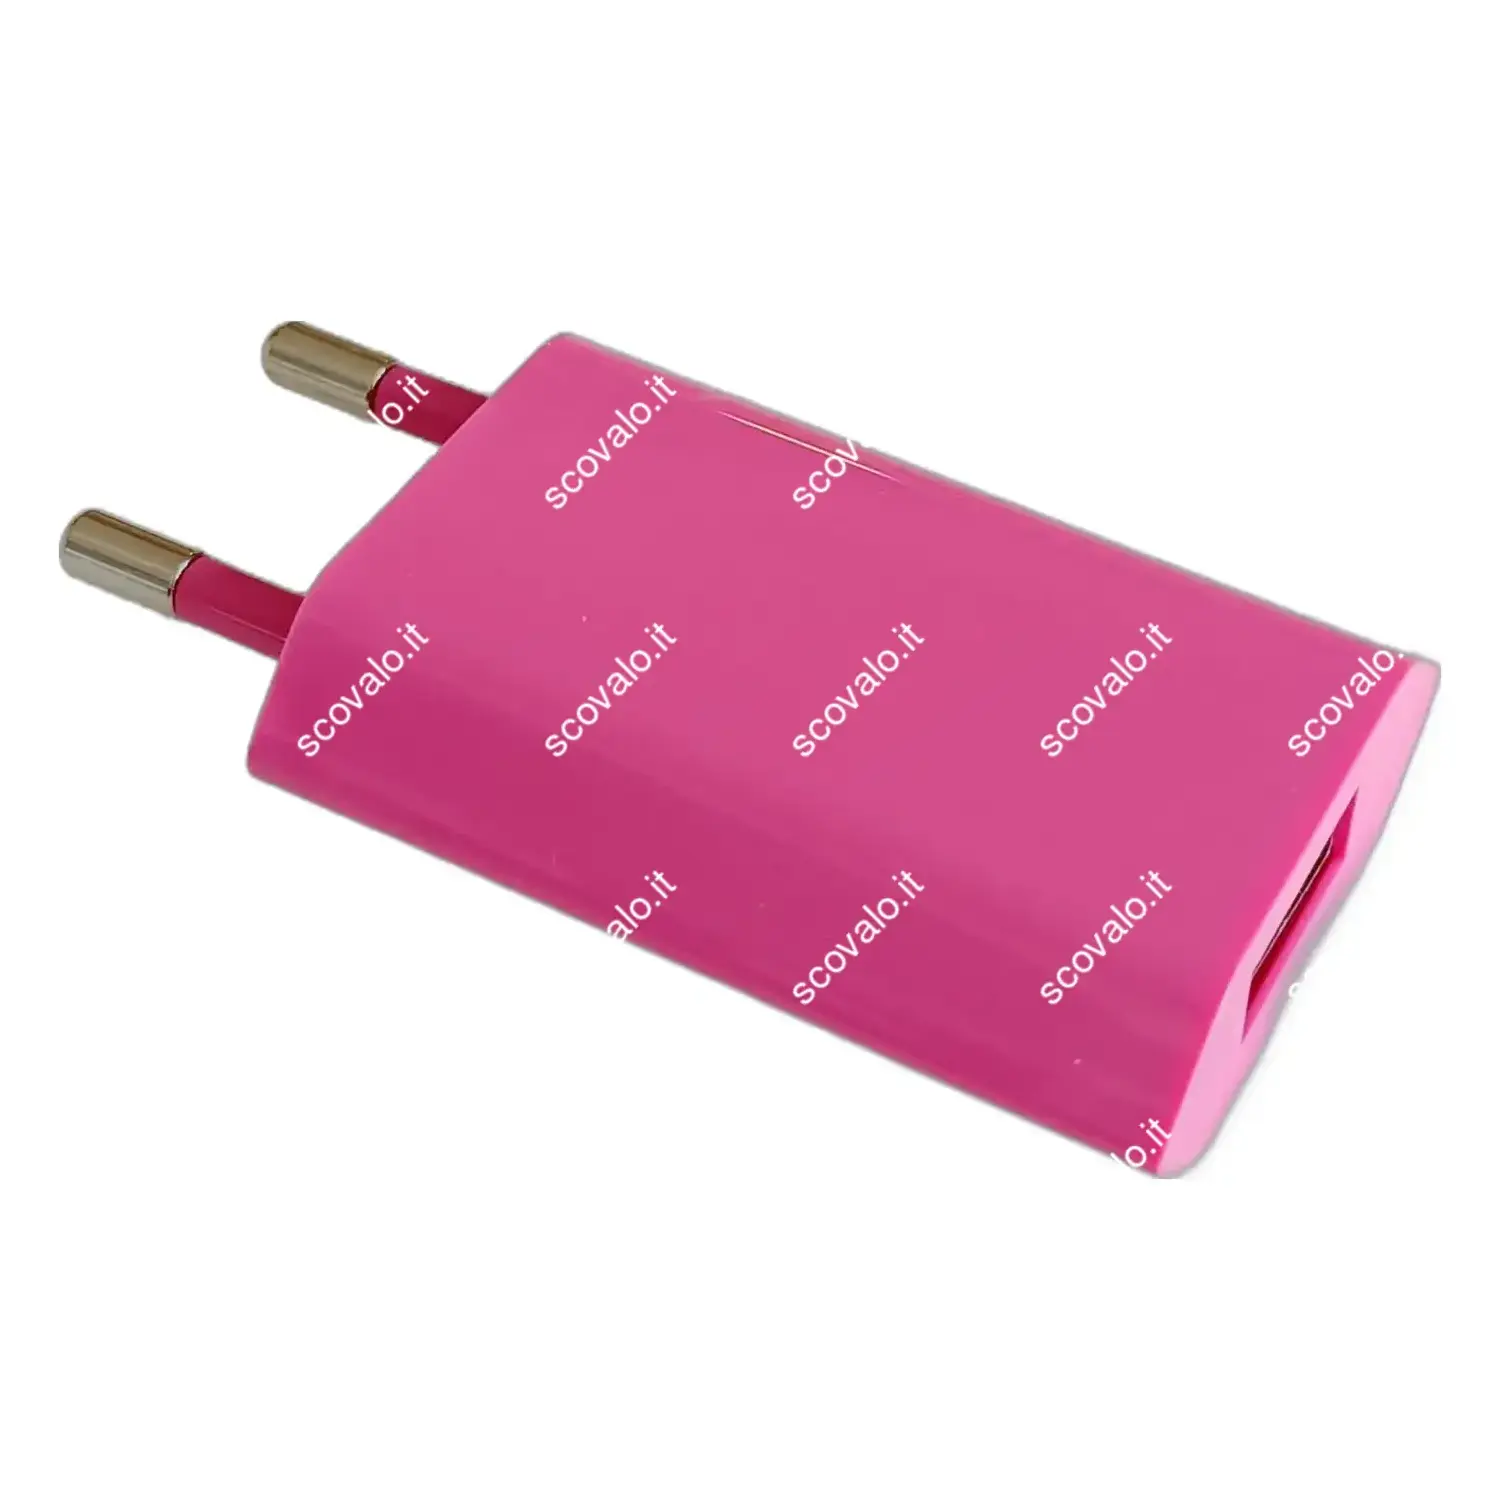 immagine alimentatore carica batteria usb 1A carica cellulari e smartphone rosa